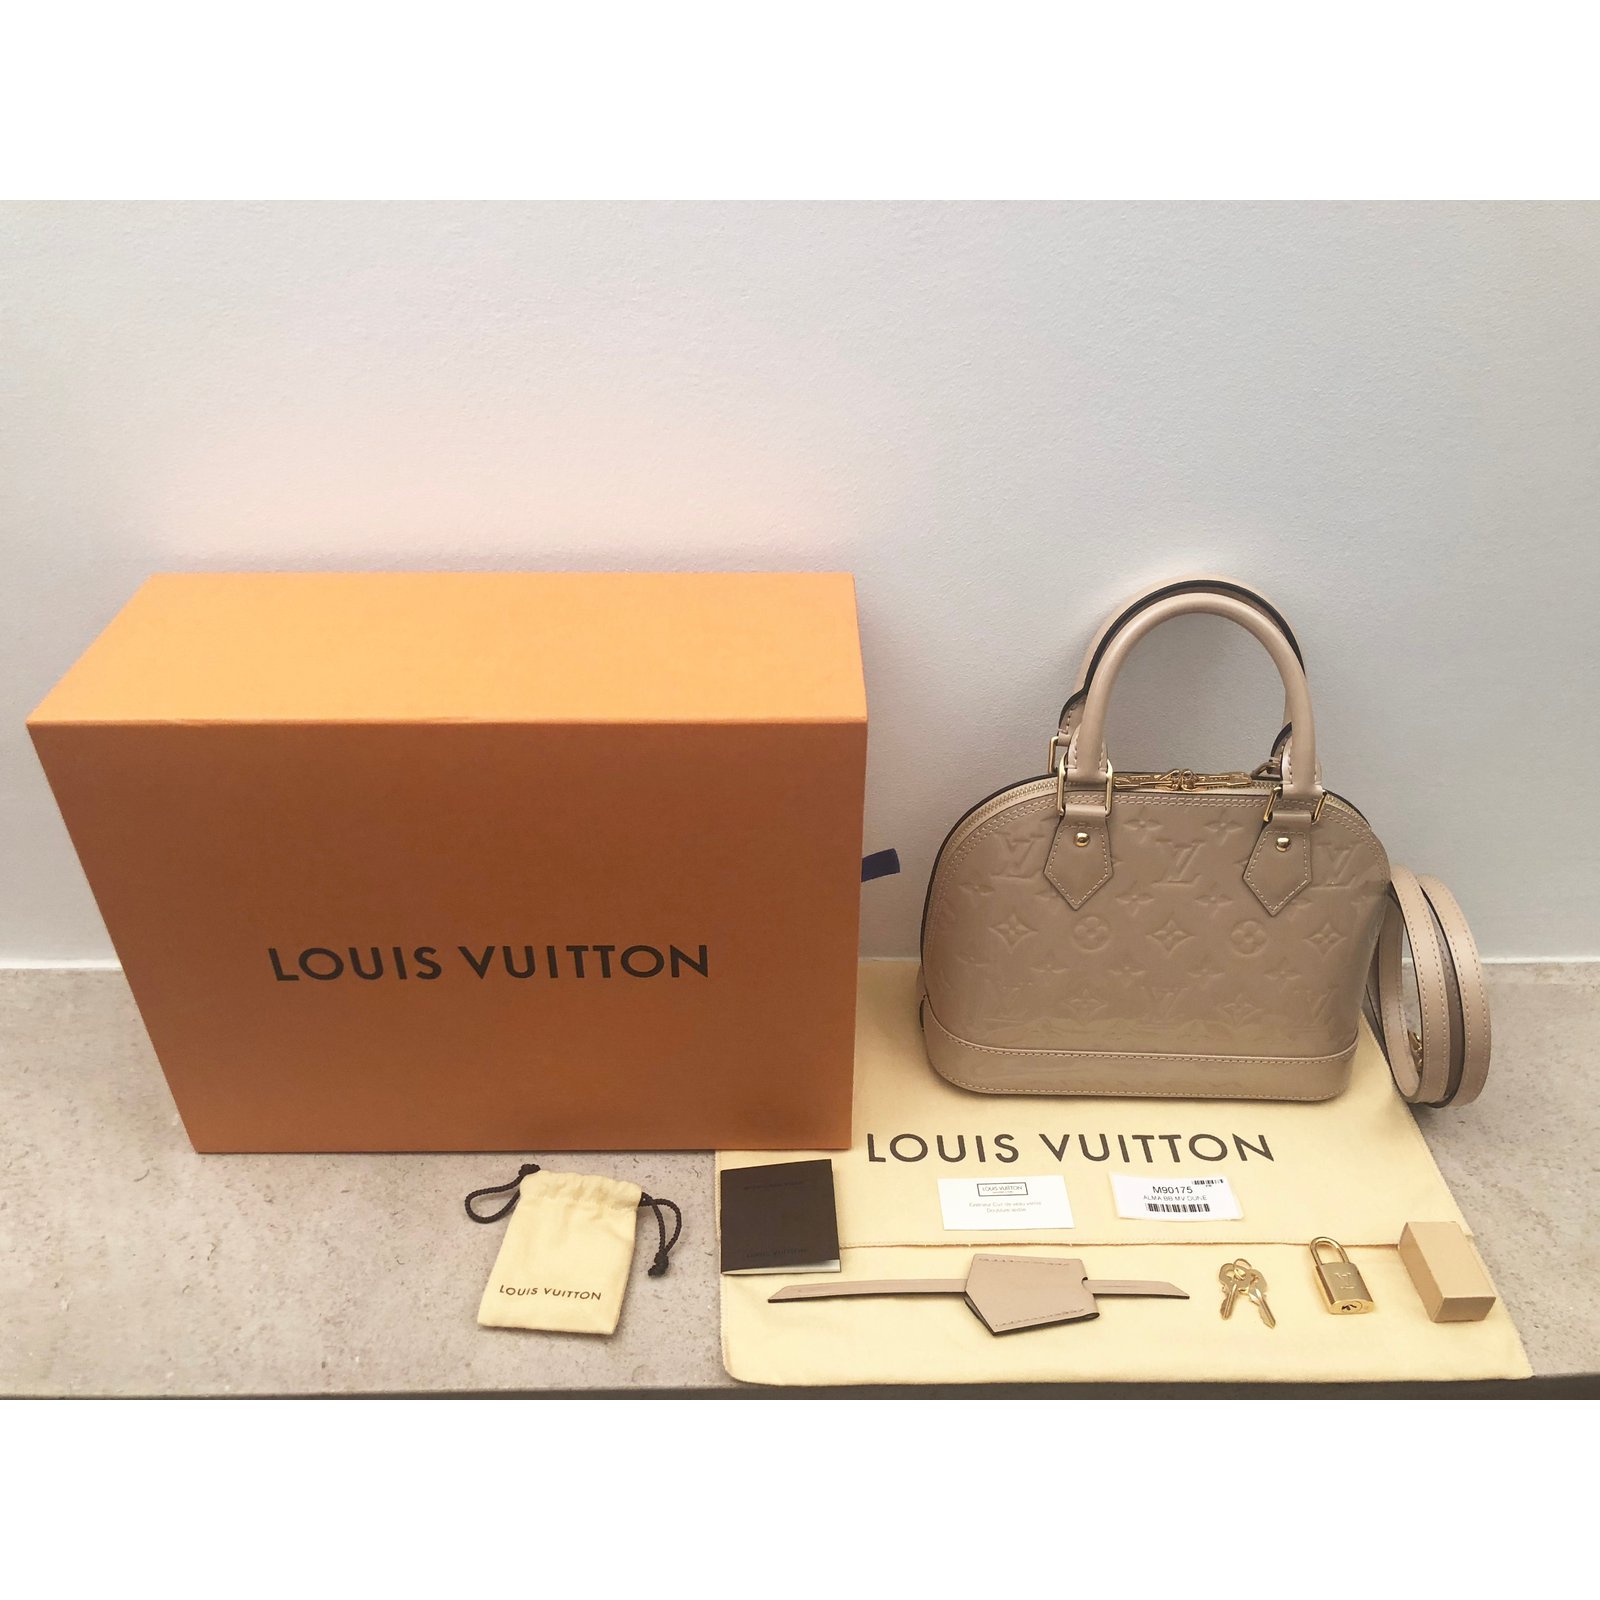 Unboxing the beautiful Louis Vuitton Néo Alma BB Bag 🖤 #louisvuitton